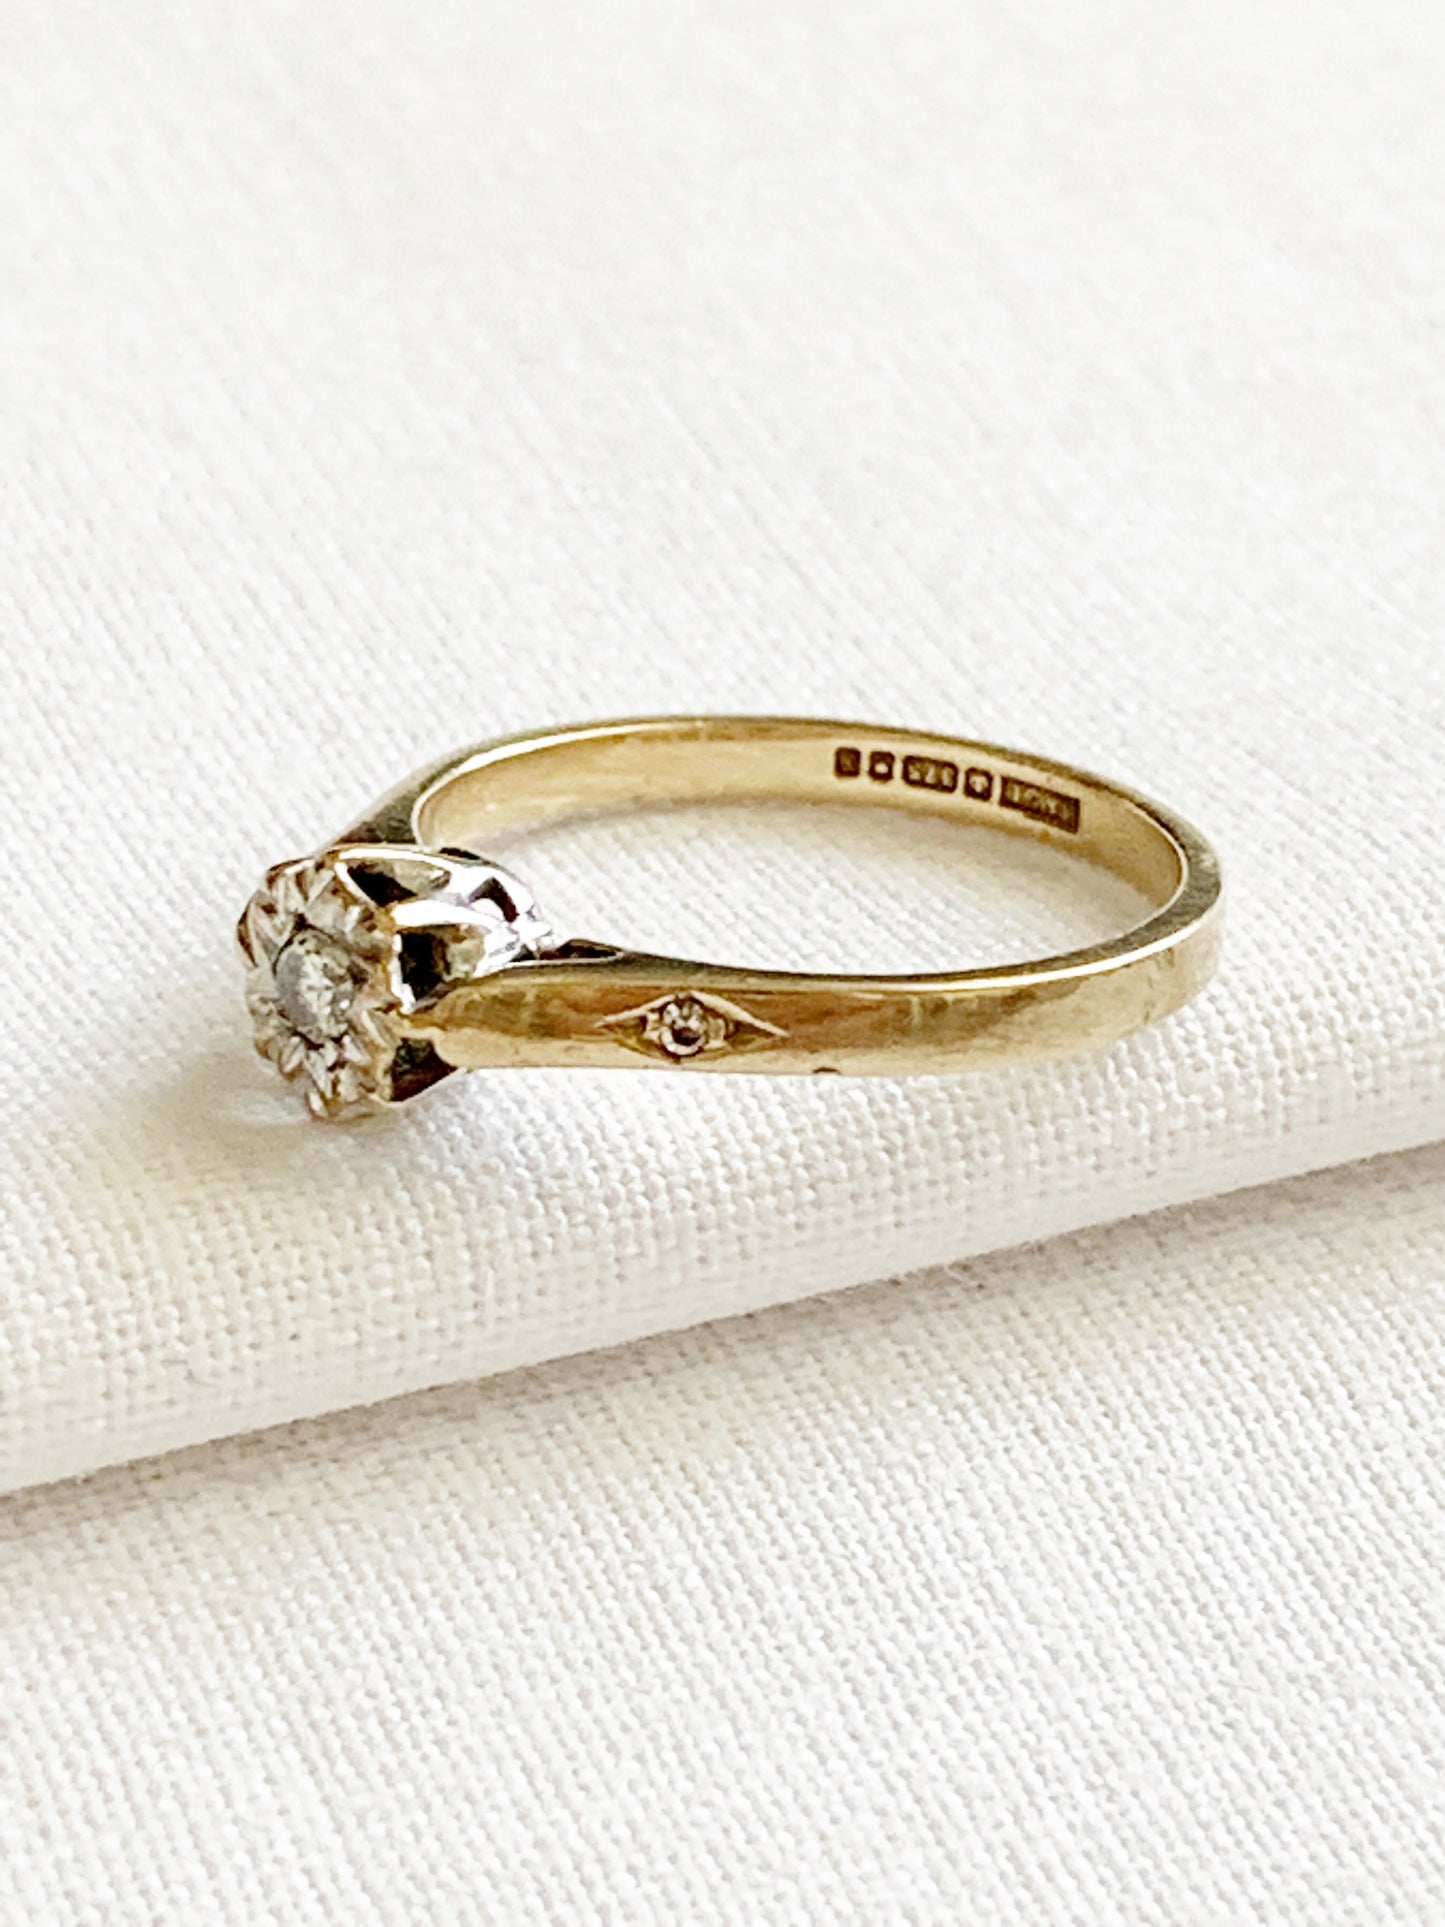 Vintage 9ct Gold Diamond Engagement Ring 1992